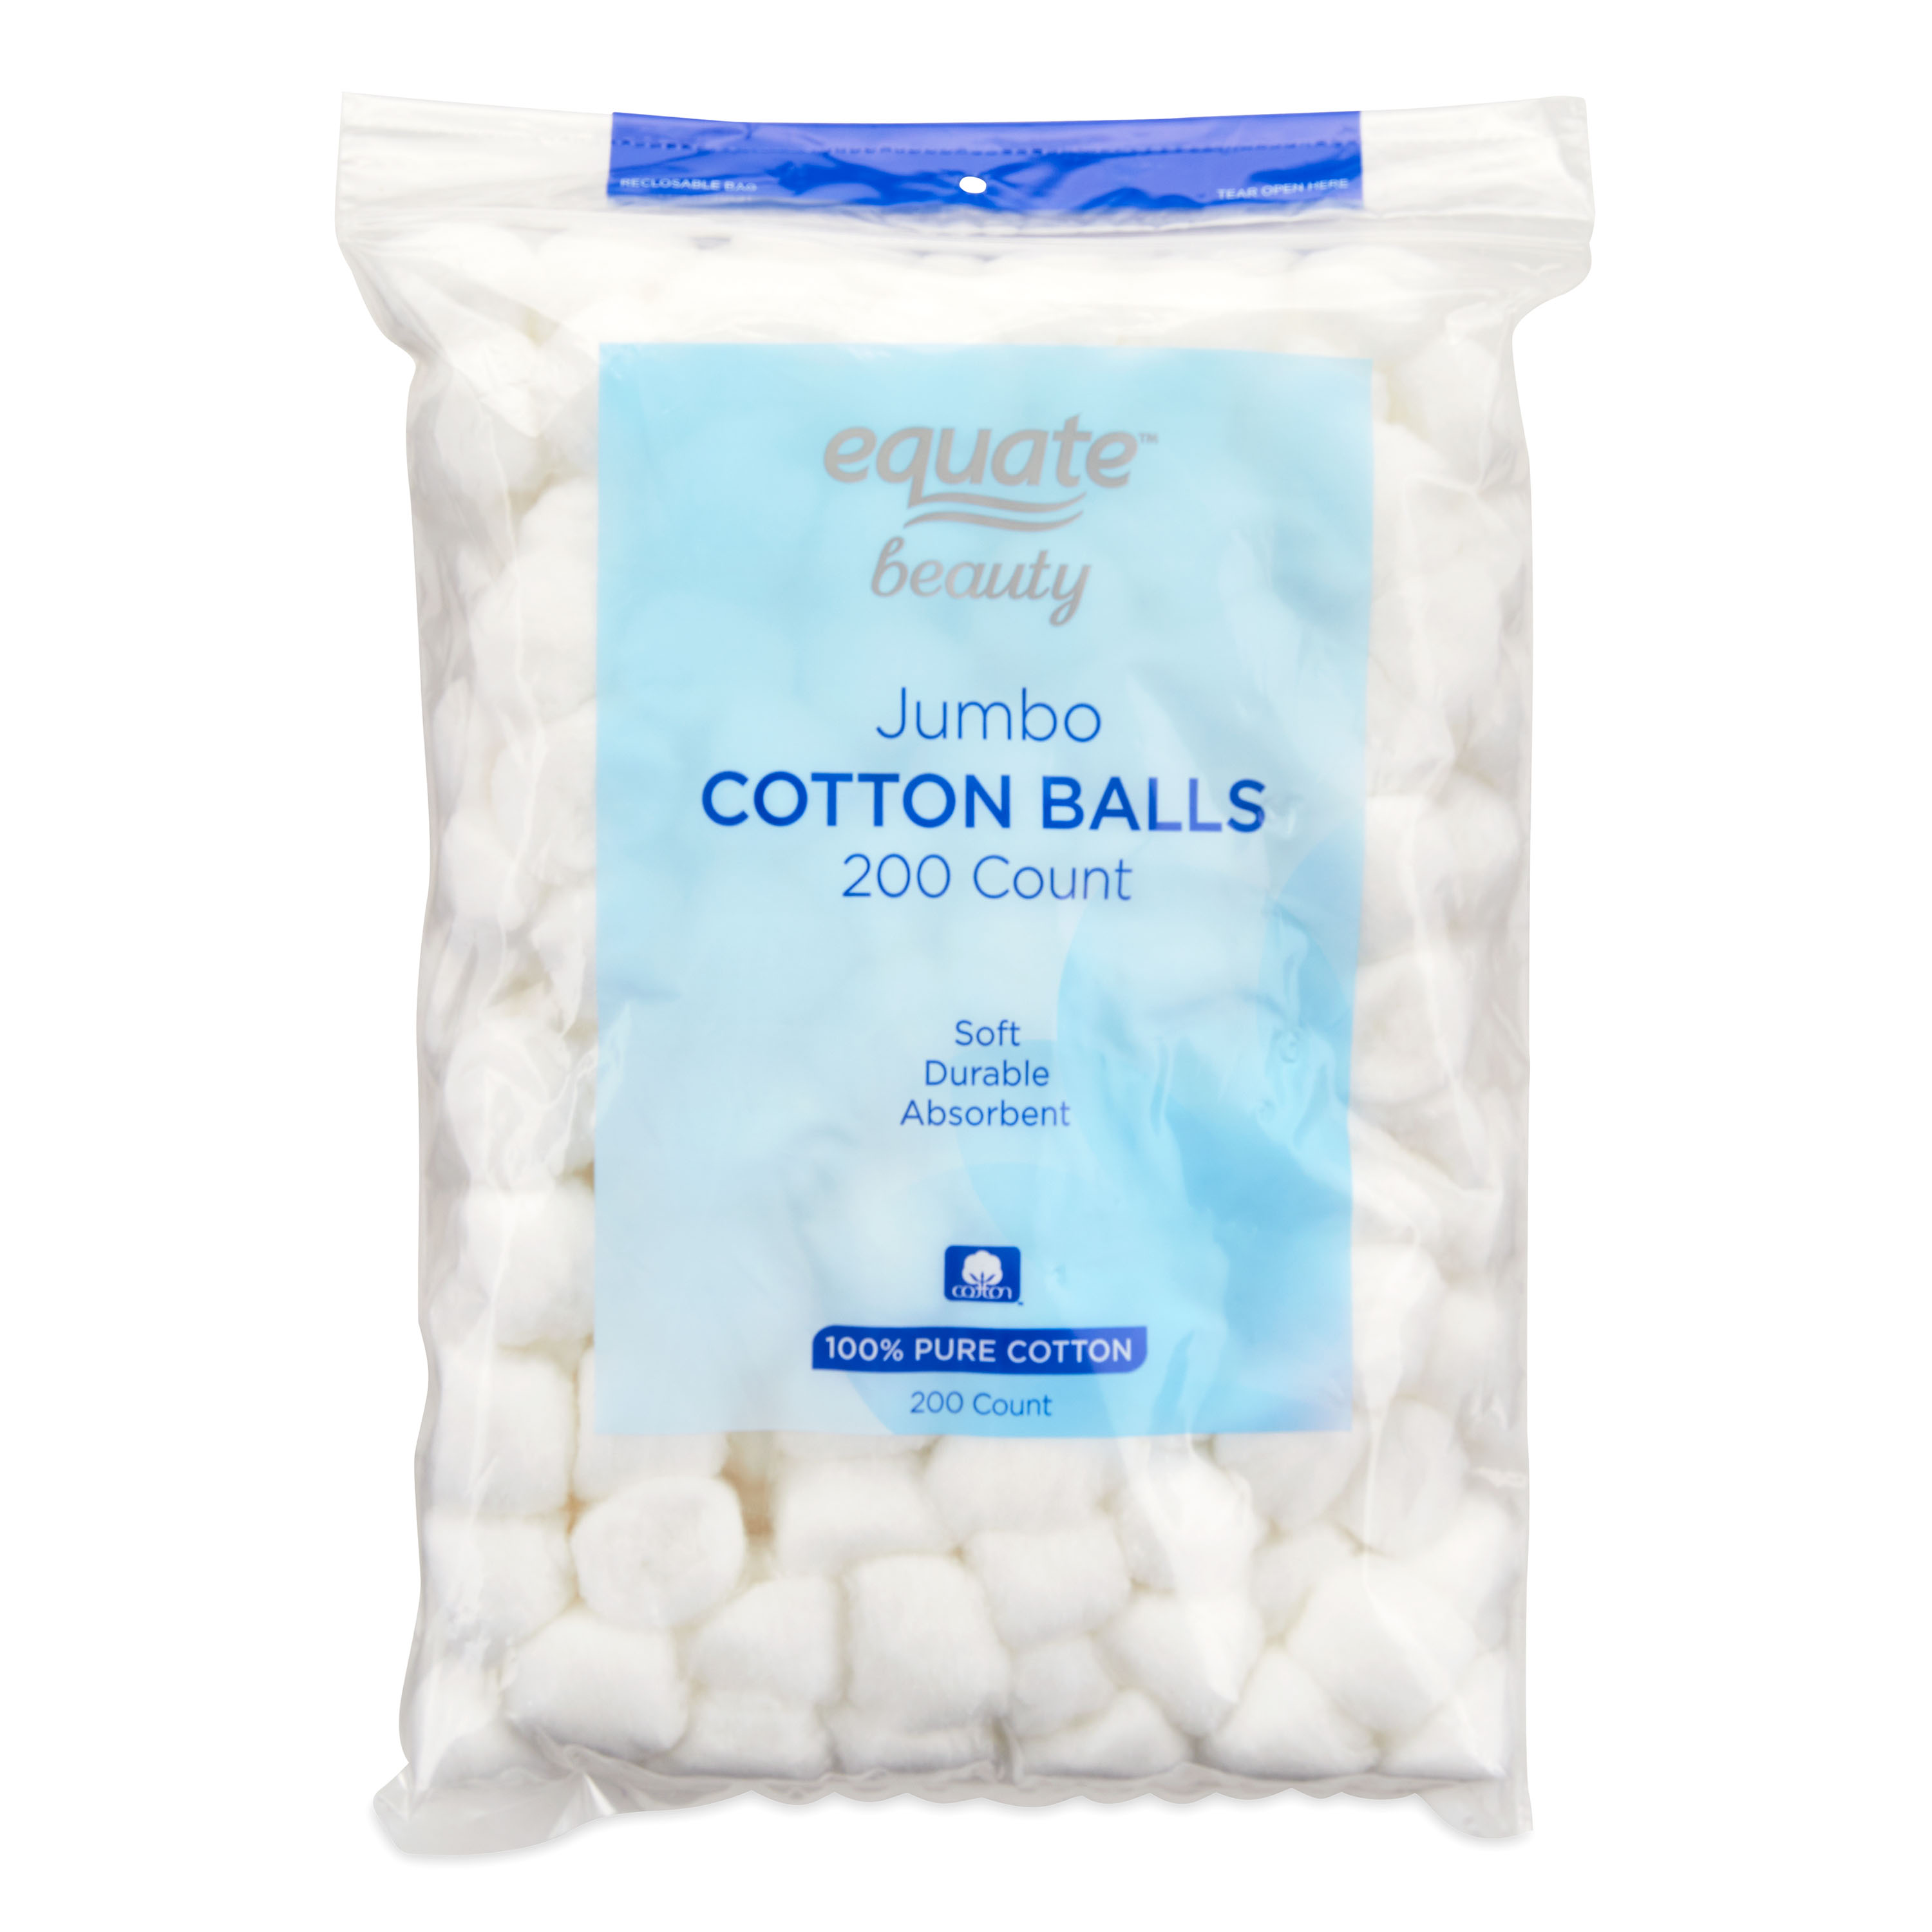 Equate Beauty Jumbo Cotton Balls, 200 Count - image 2 of 4